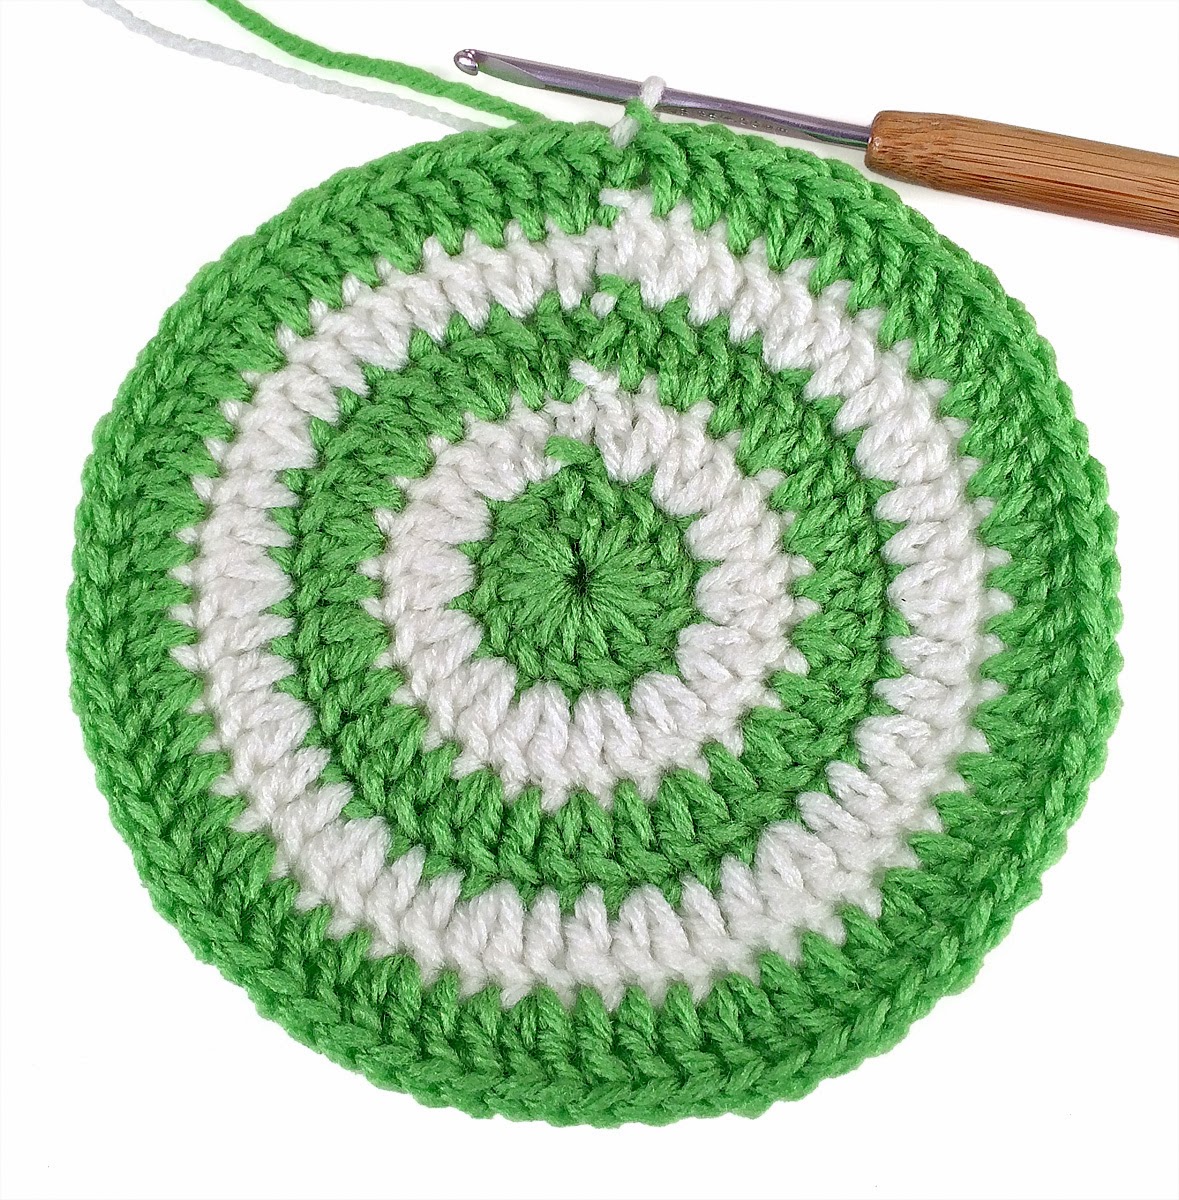 Vibrant Multicolor Crochet Market Bag